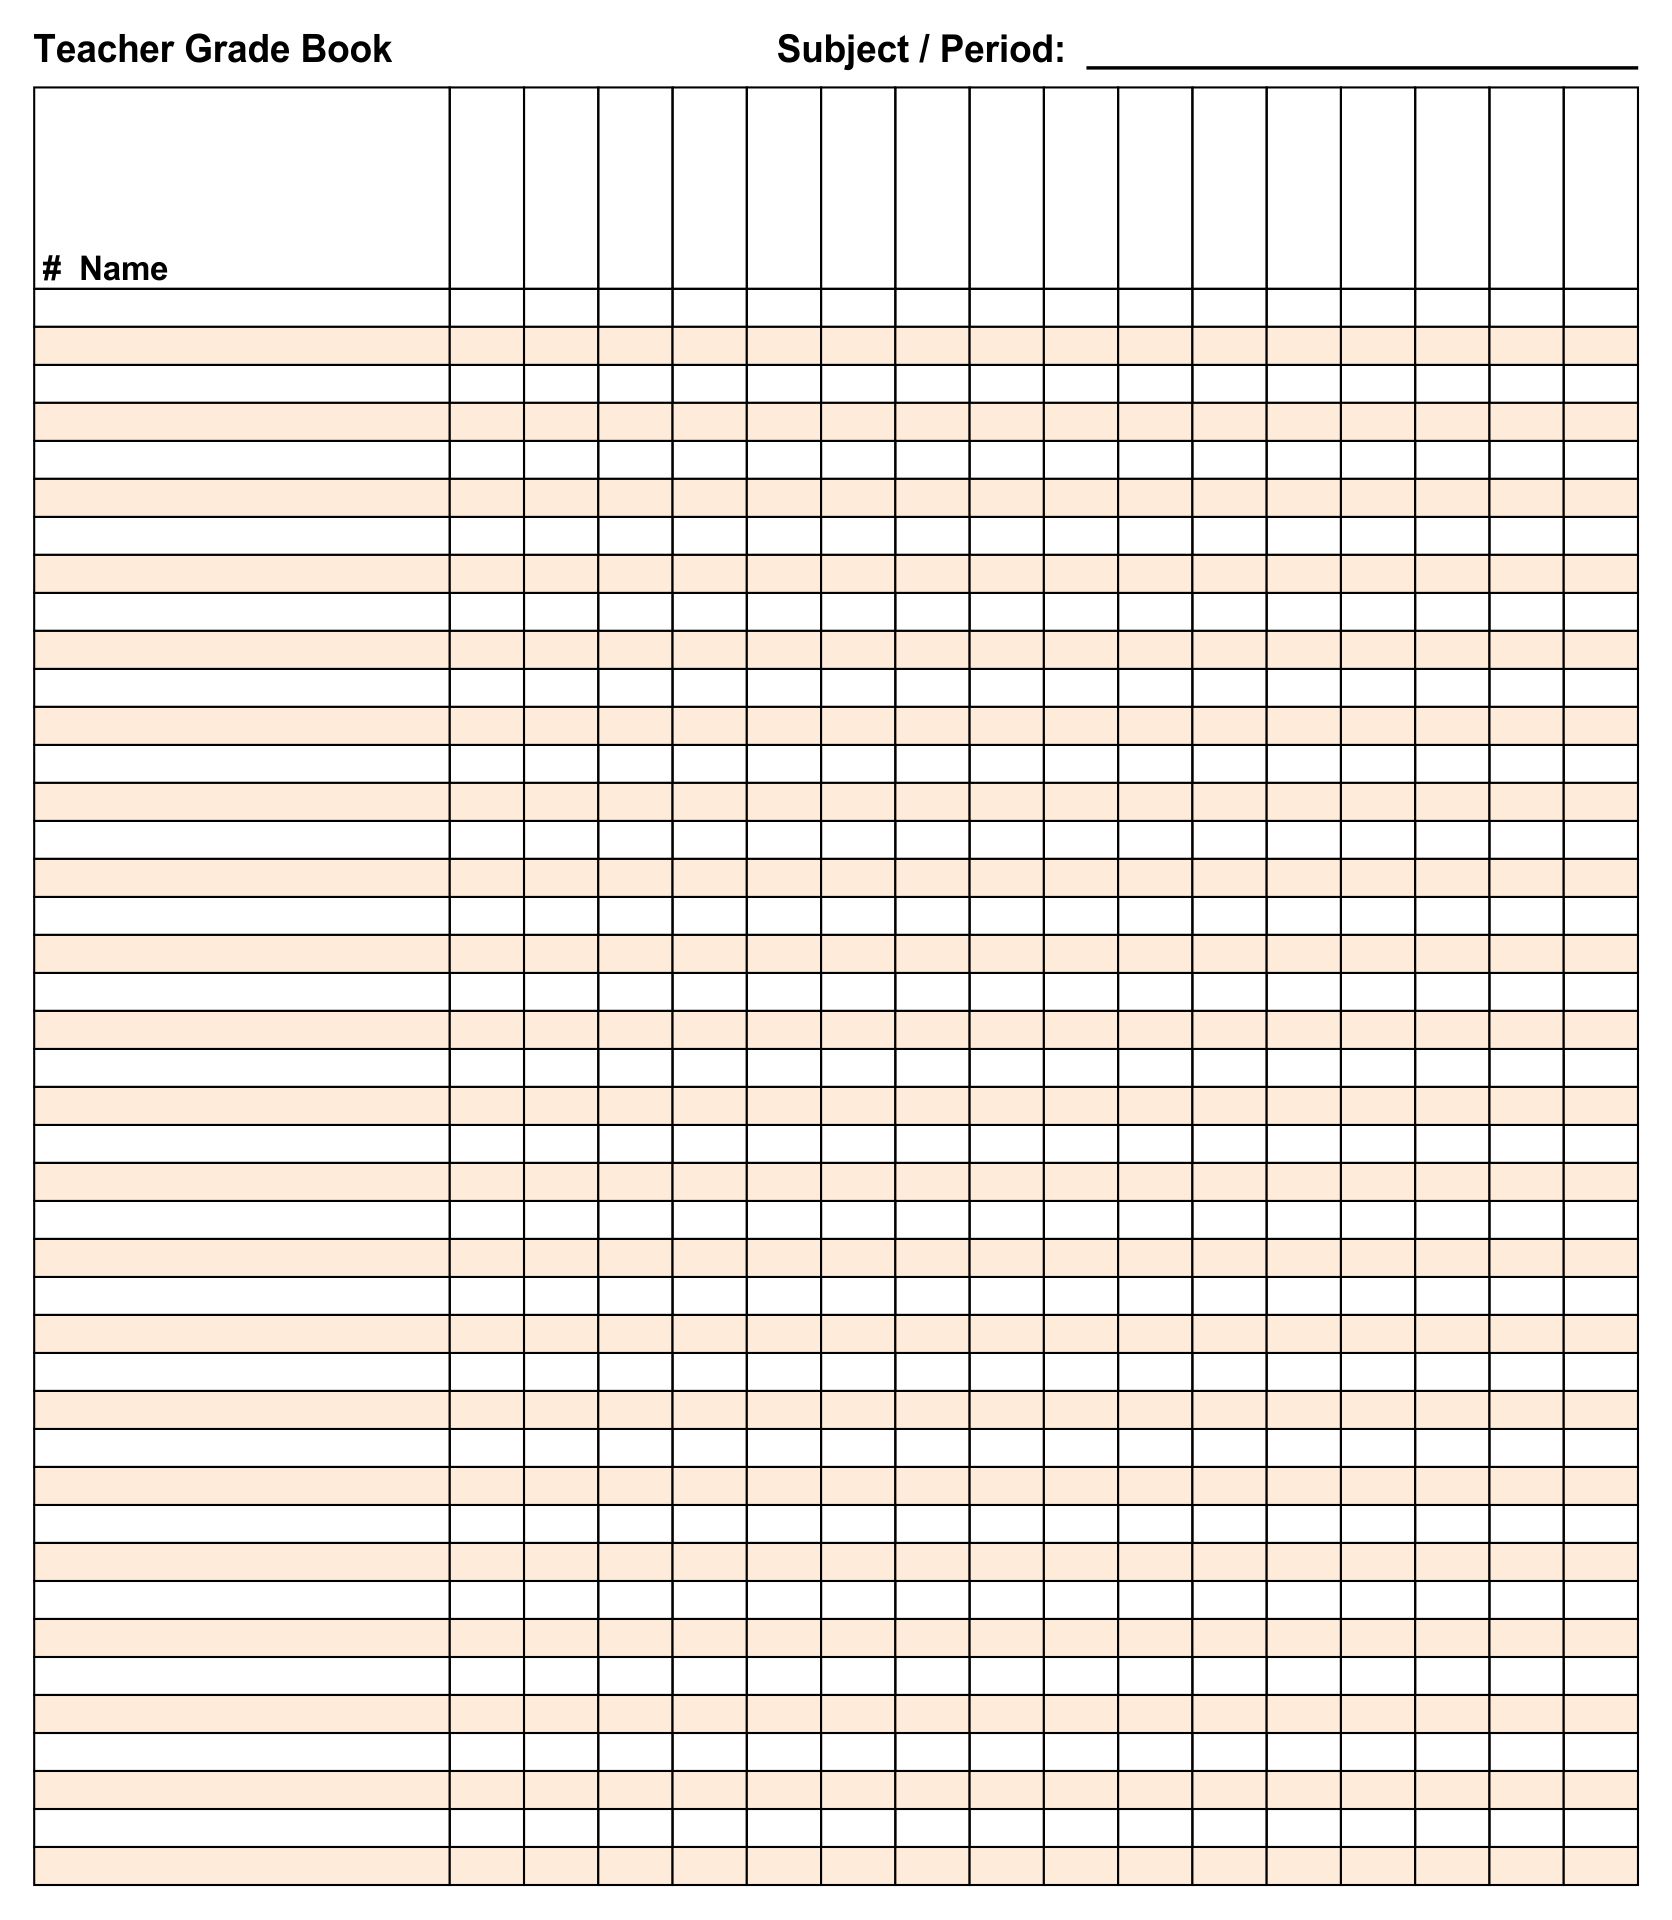 free-printable-teacher-roll-book-printable-templates